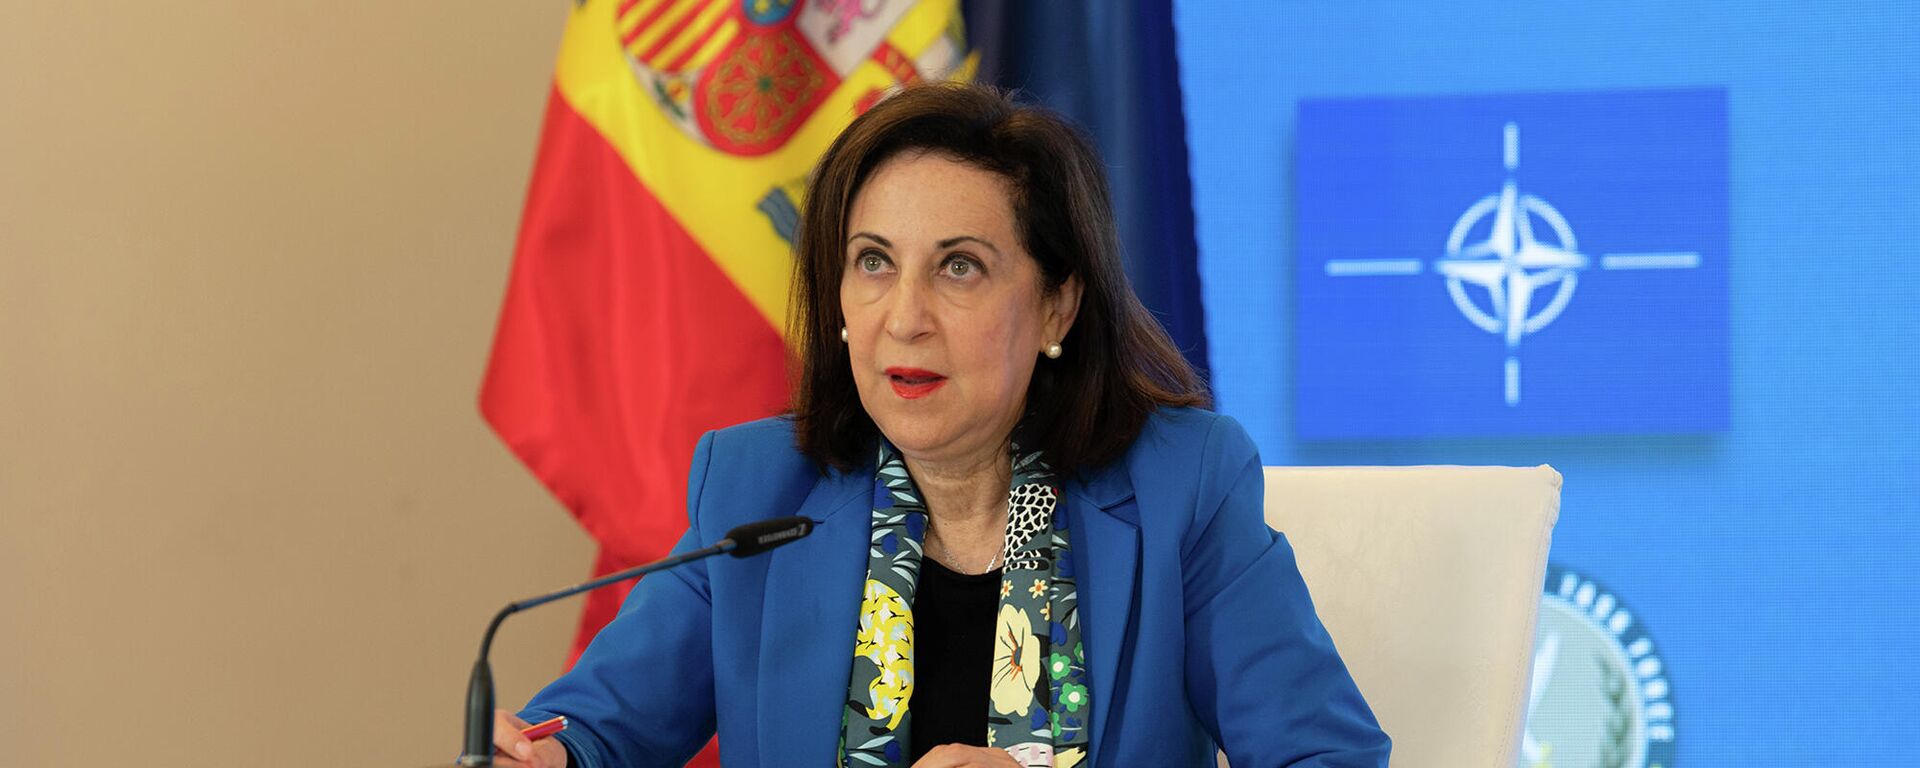 Margarita Robles, la ministra de Defensa de España - Sputnik Mundo, 1920, 28.02.2022